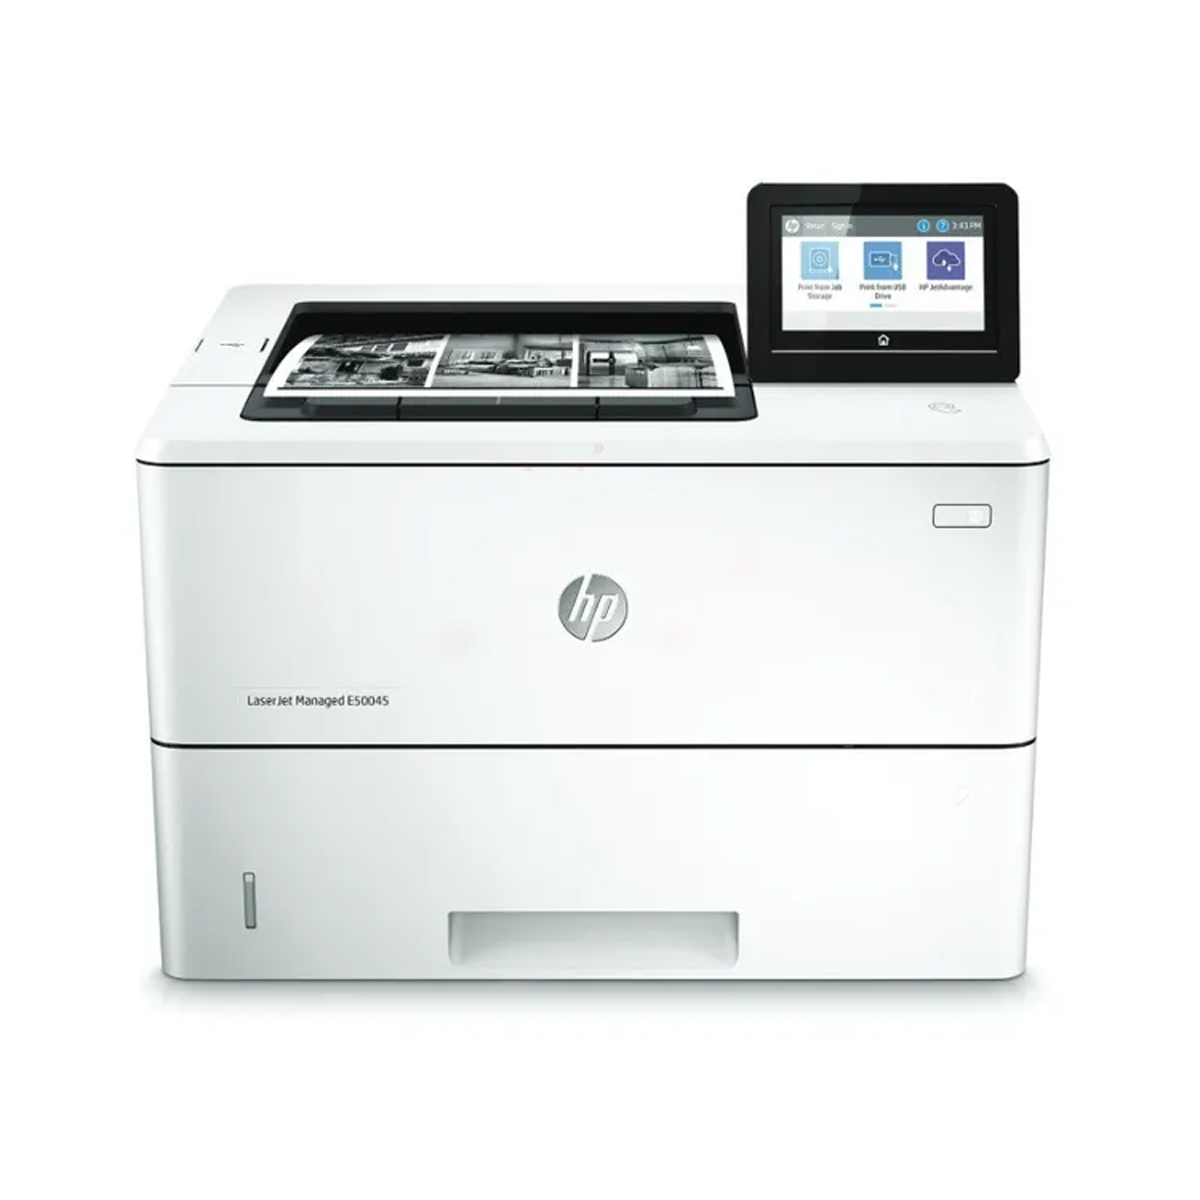 Crno-beli štampač HP E50045 45ppm 1200dpi